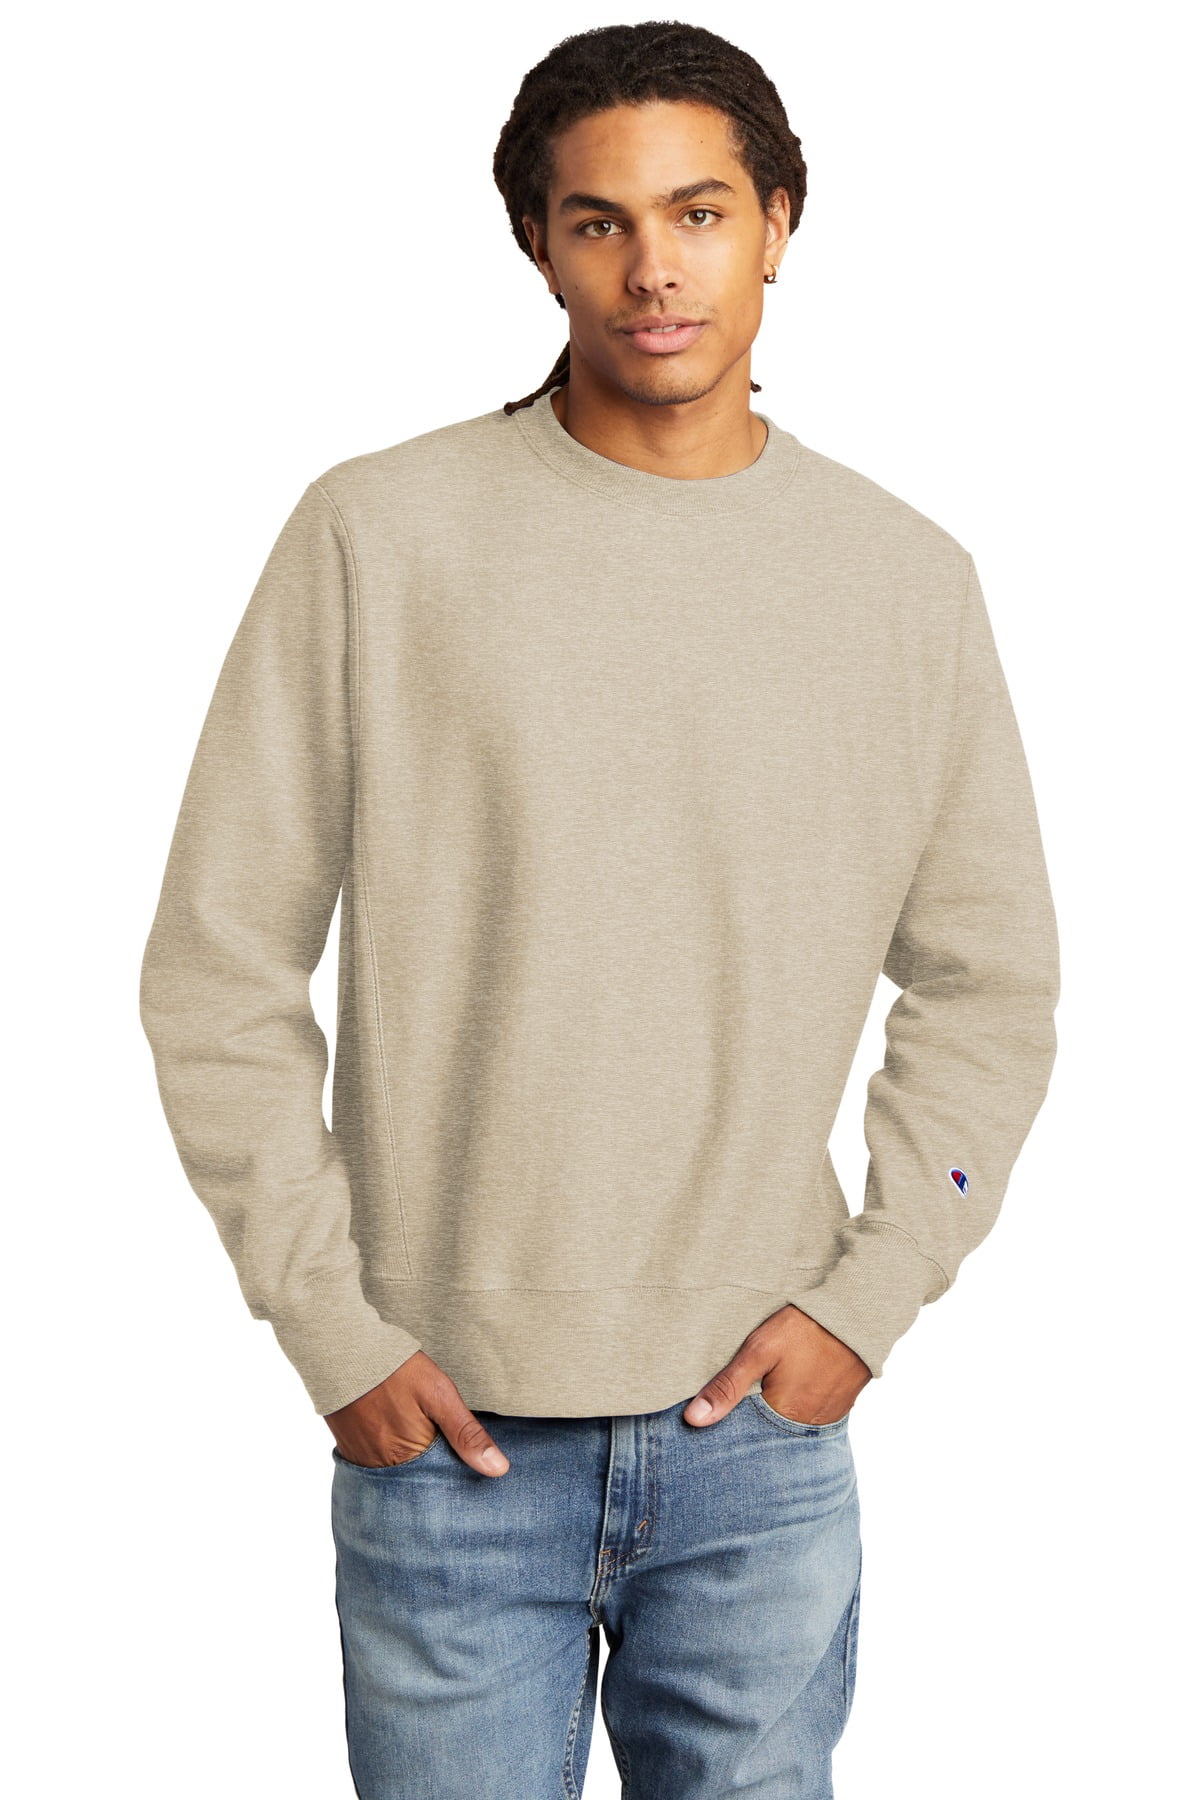 Champion - Reverse Weave Crewneck Sweatshirt - S149 - Walmart.com